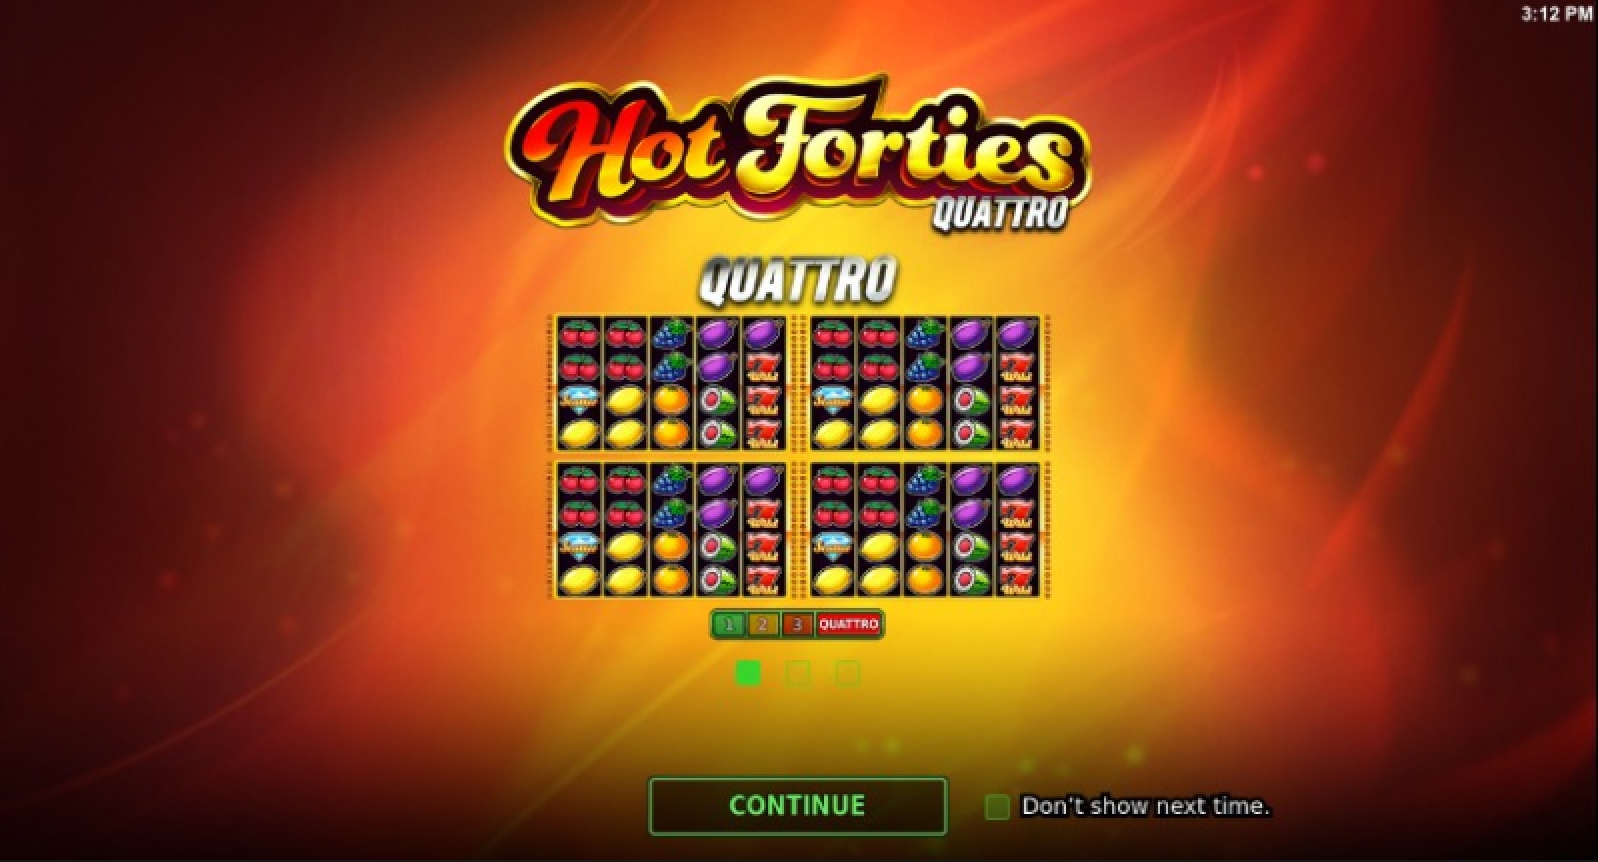 Hot Forties Quattro demo